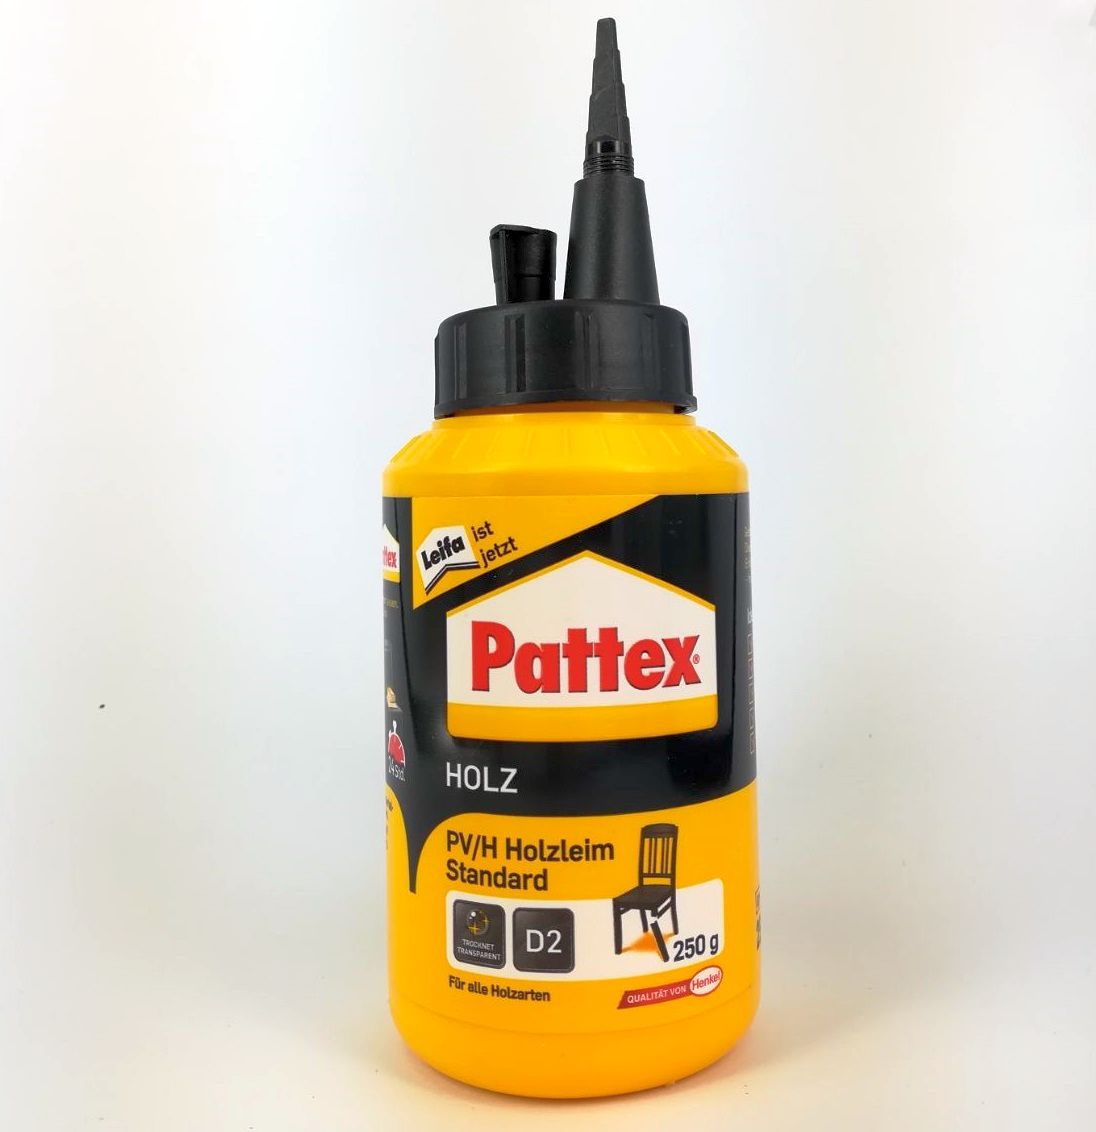 Pattex Holzleim PV/H Standard 250g